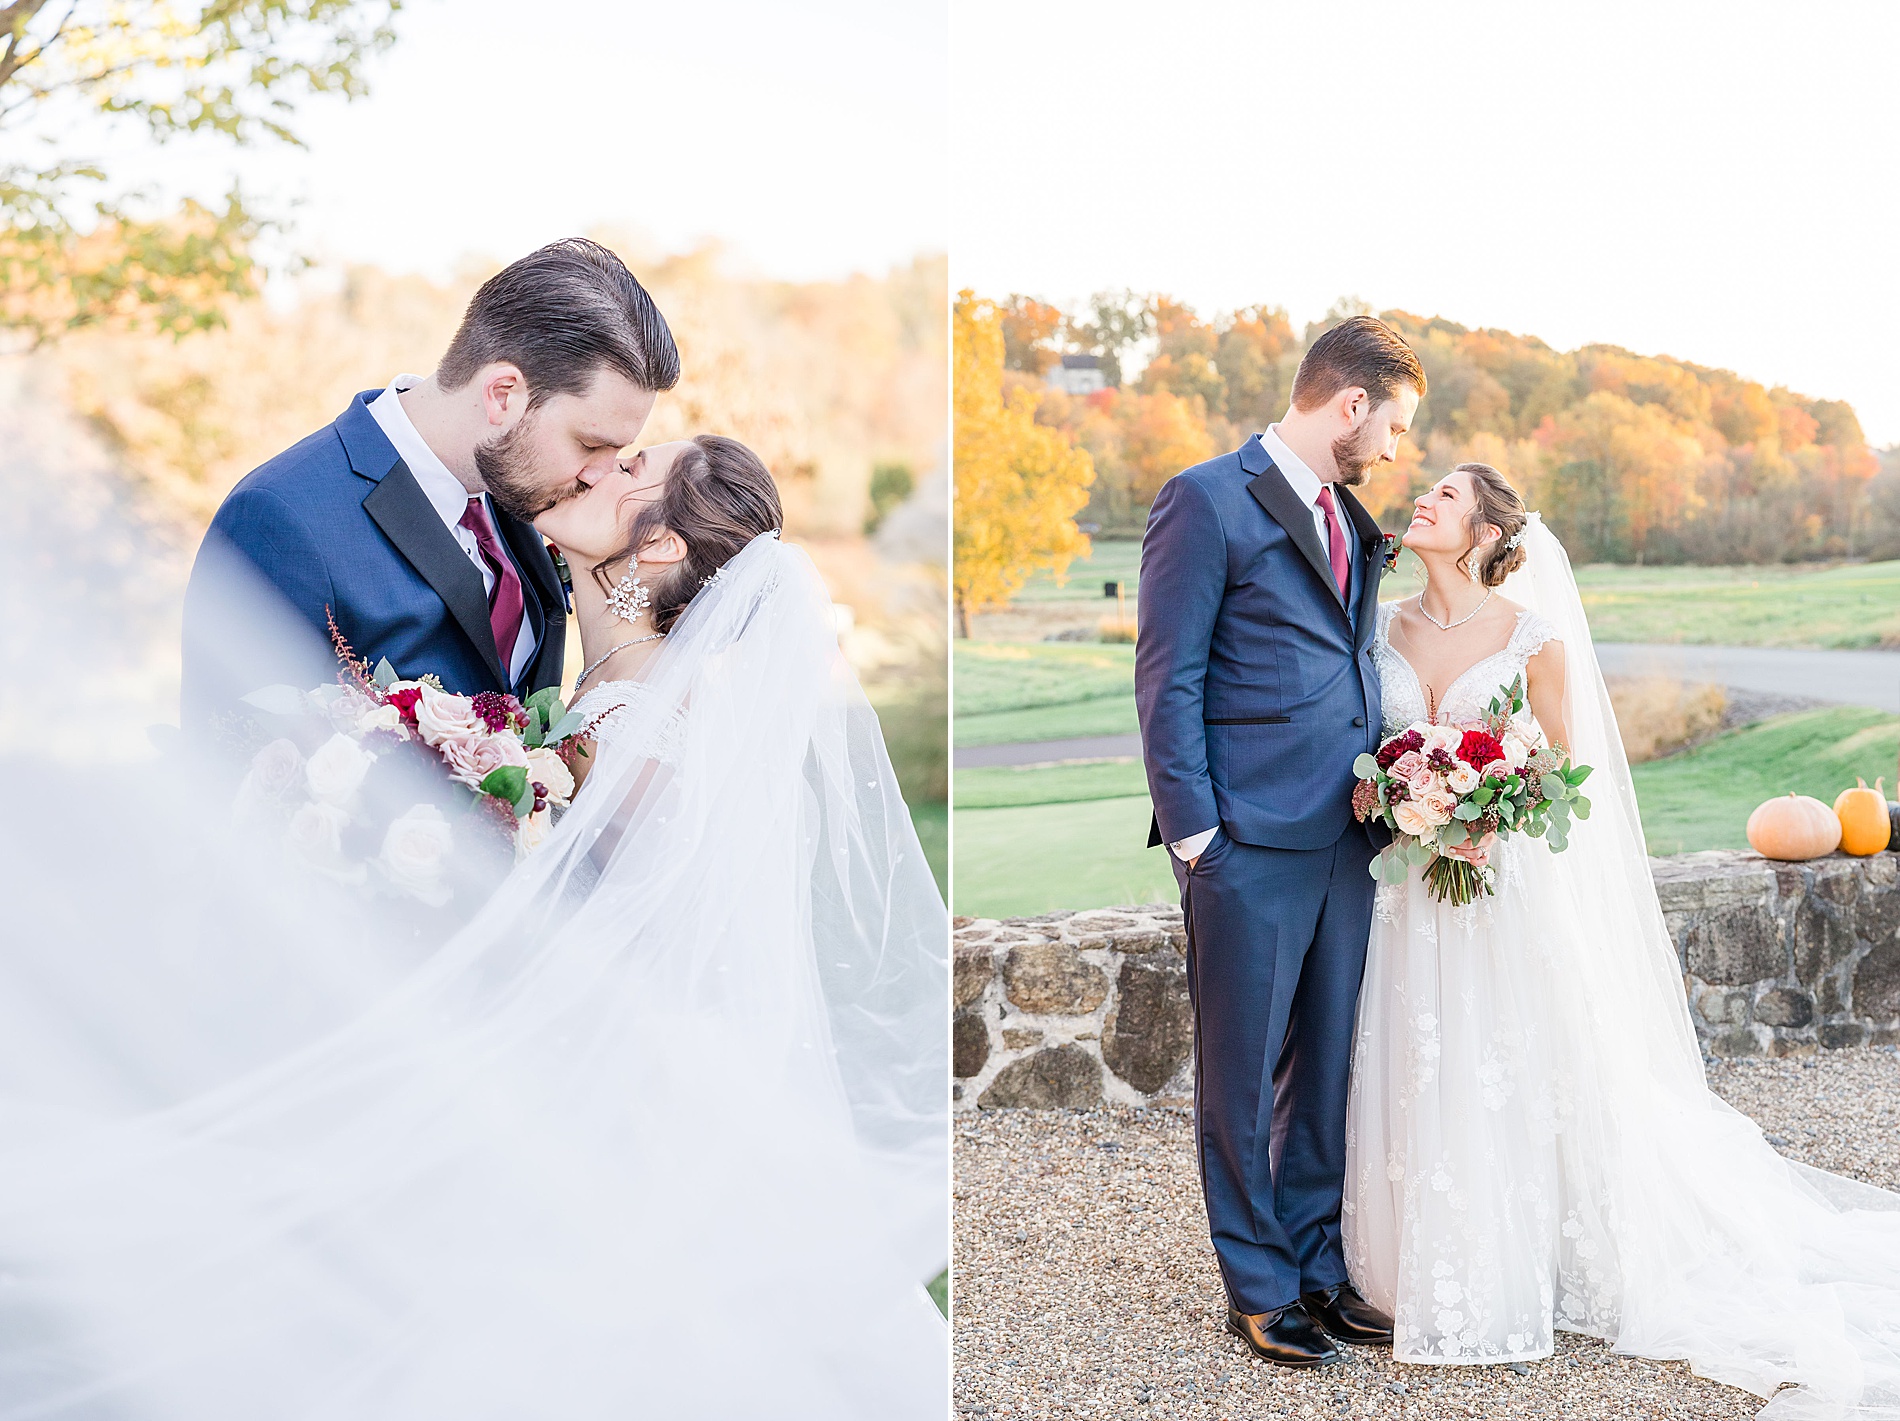 PA wedding photographer Amber Dawn captures Fall Wedding portraits at French Creek Golf Club